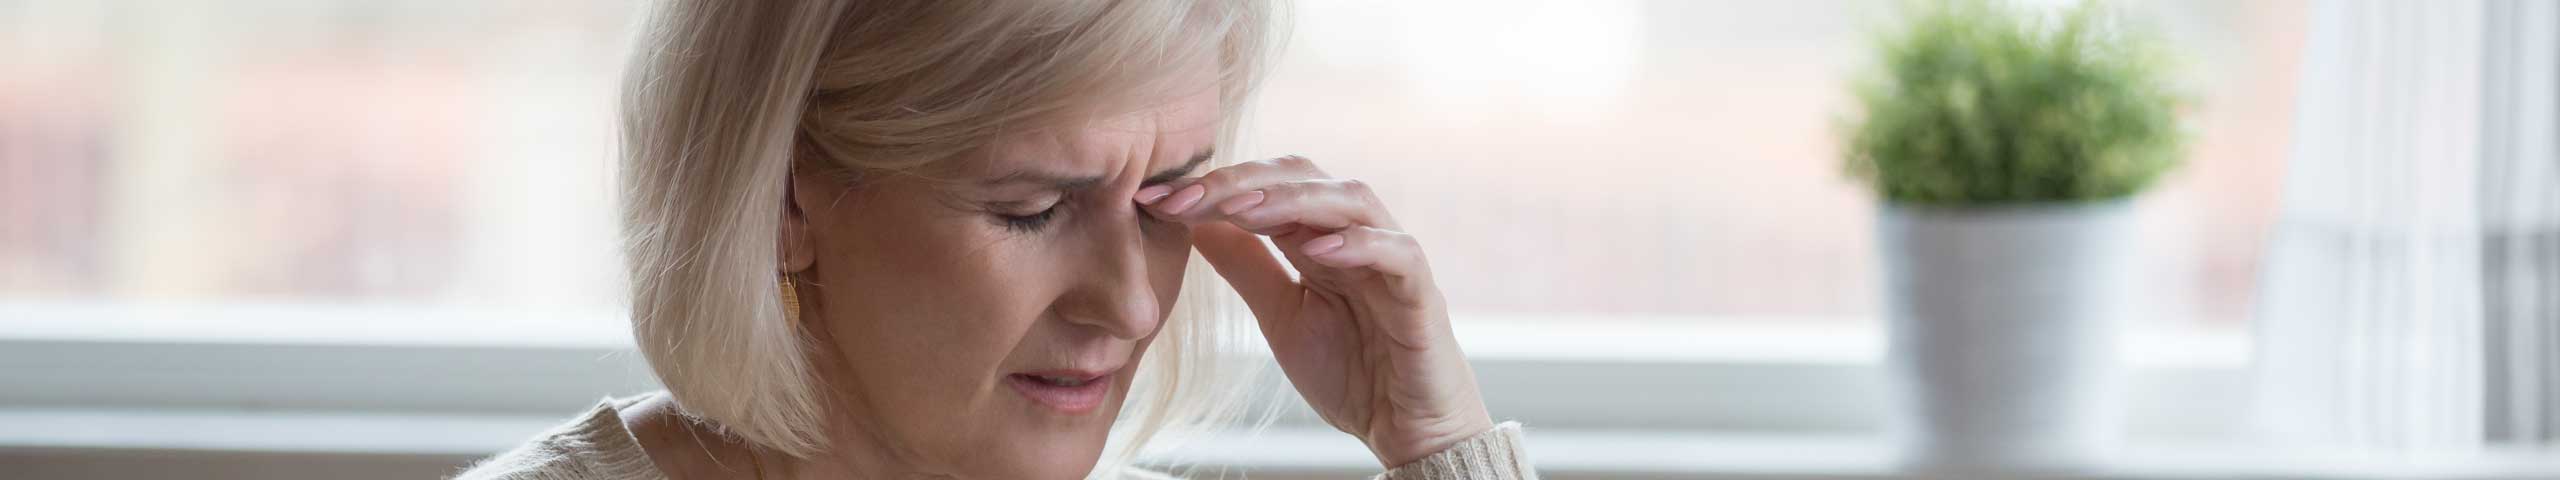 The symptoms of dry eye.